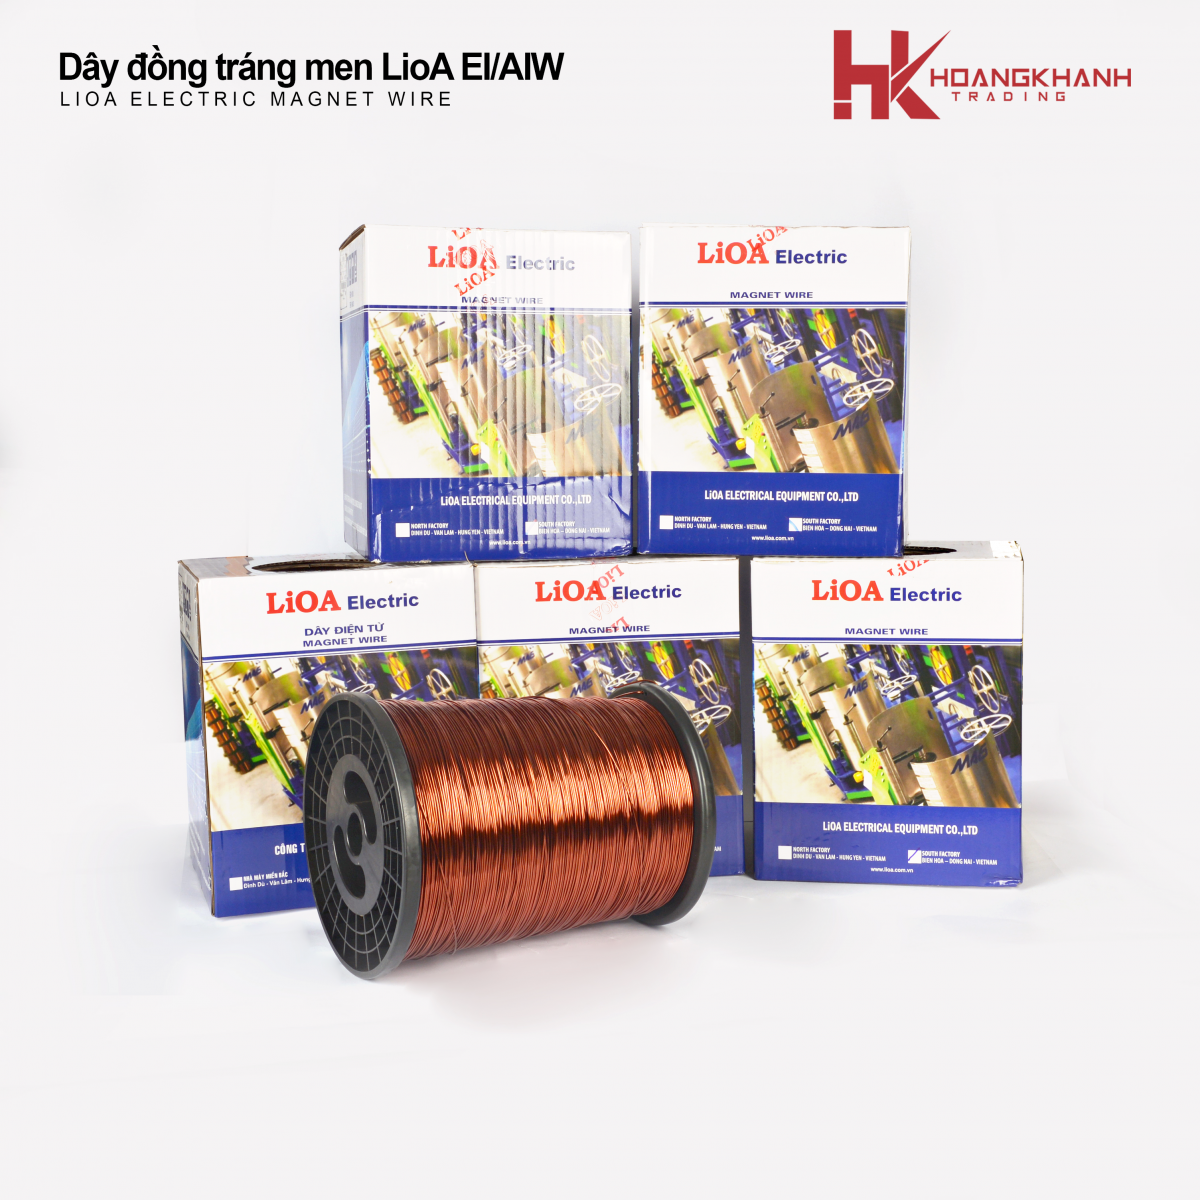 Round Enamelled Copper Wire LioA EI/AIW